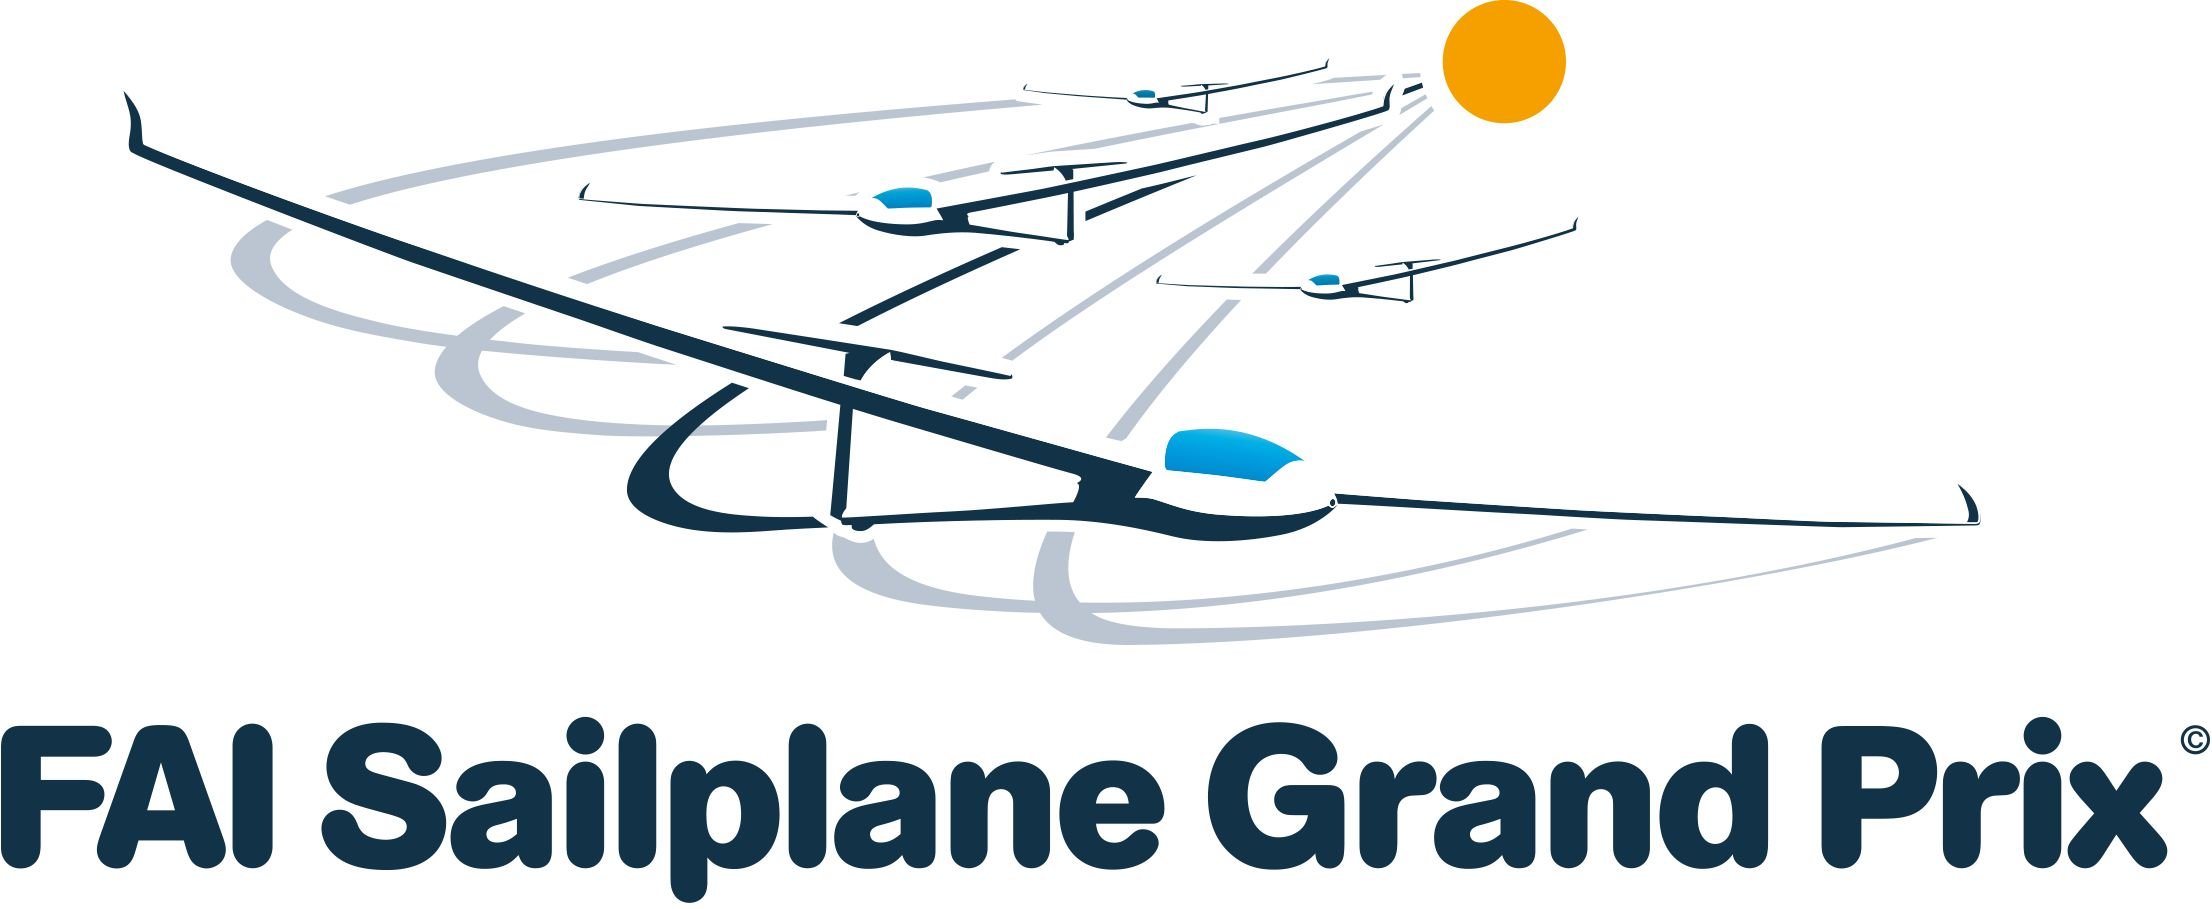 [Series 12 FAI Sailplane Grand Prix] Norway Venue – Starmoen